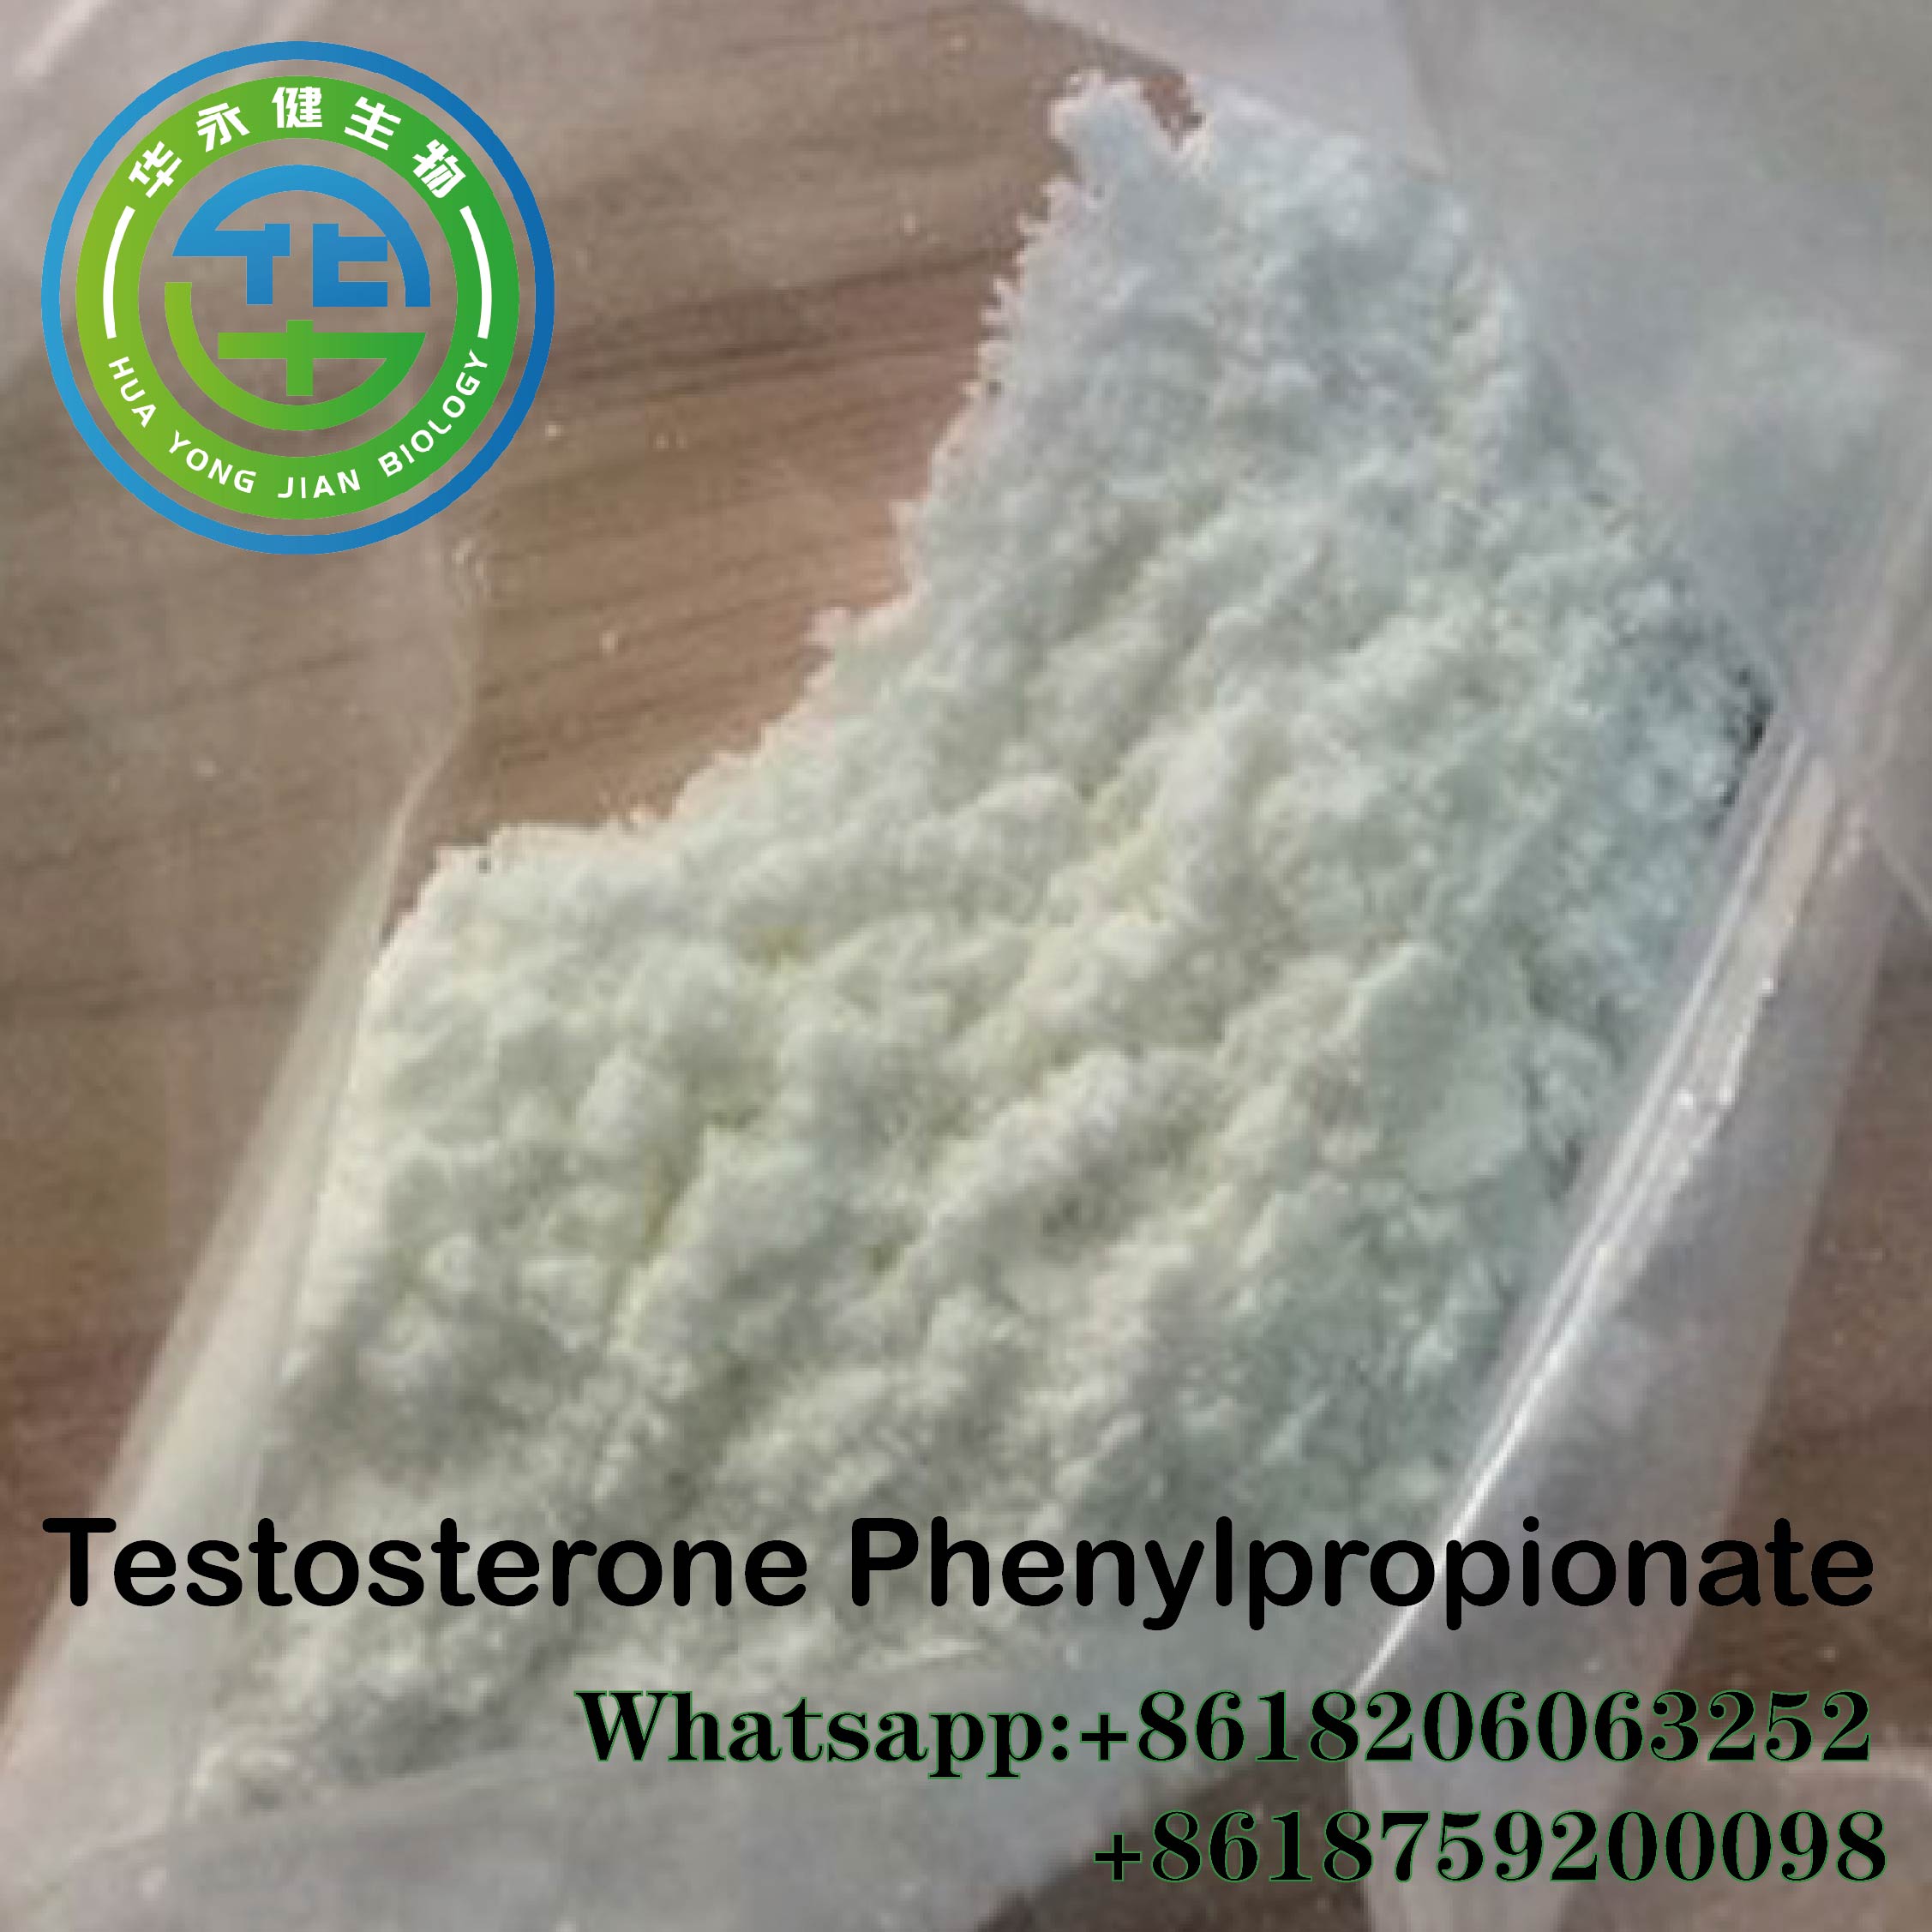  Steroid Testosterone Phenylpropionate White Raw Powder Test Phenylpropionate For Body Building